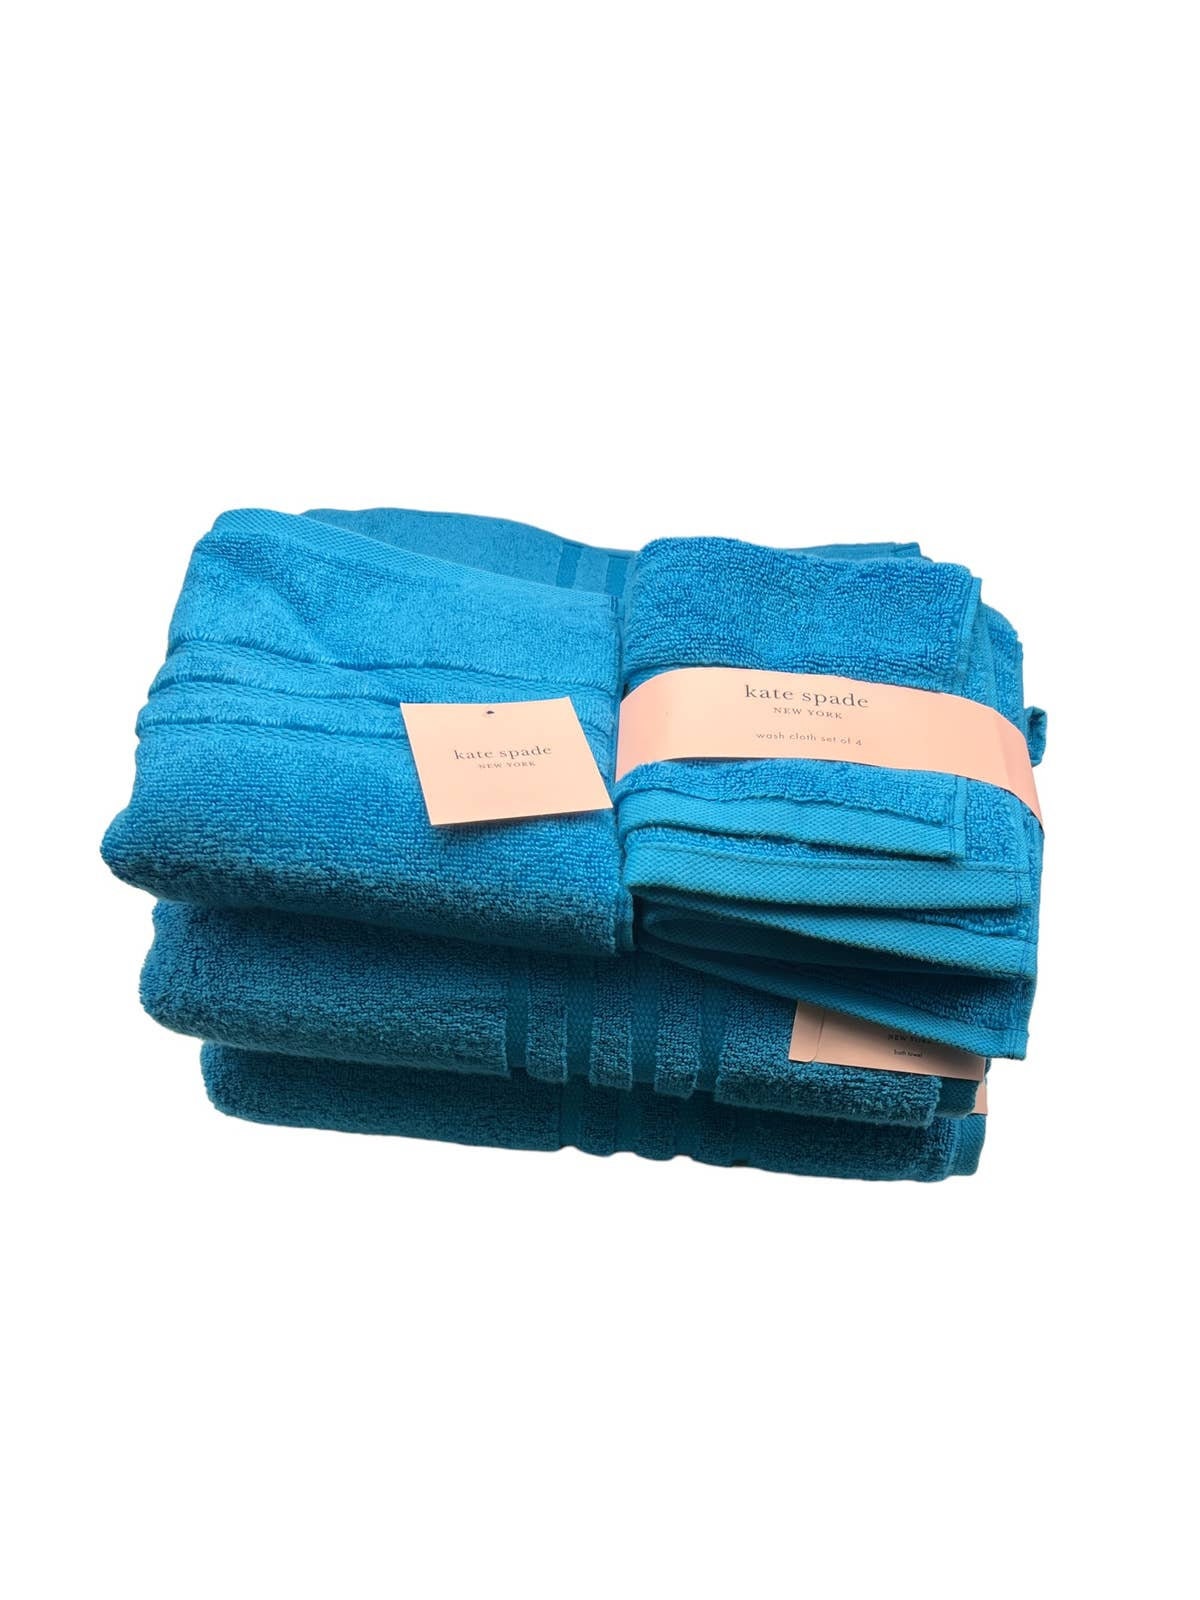 Kate Spade Blue Bath Towels Set of 7 - Etsy